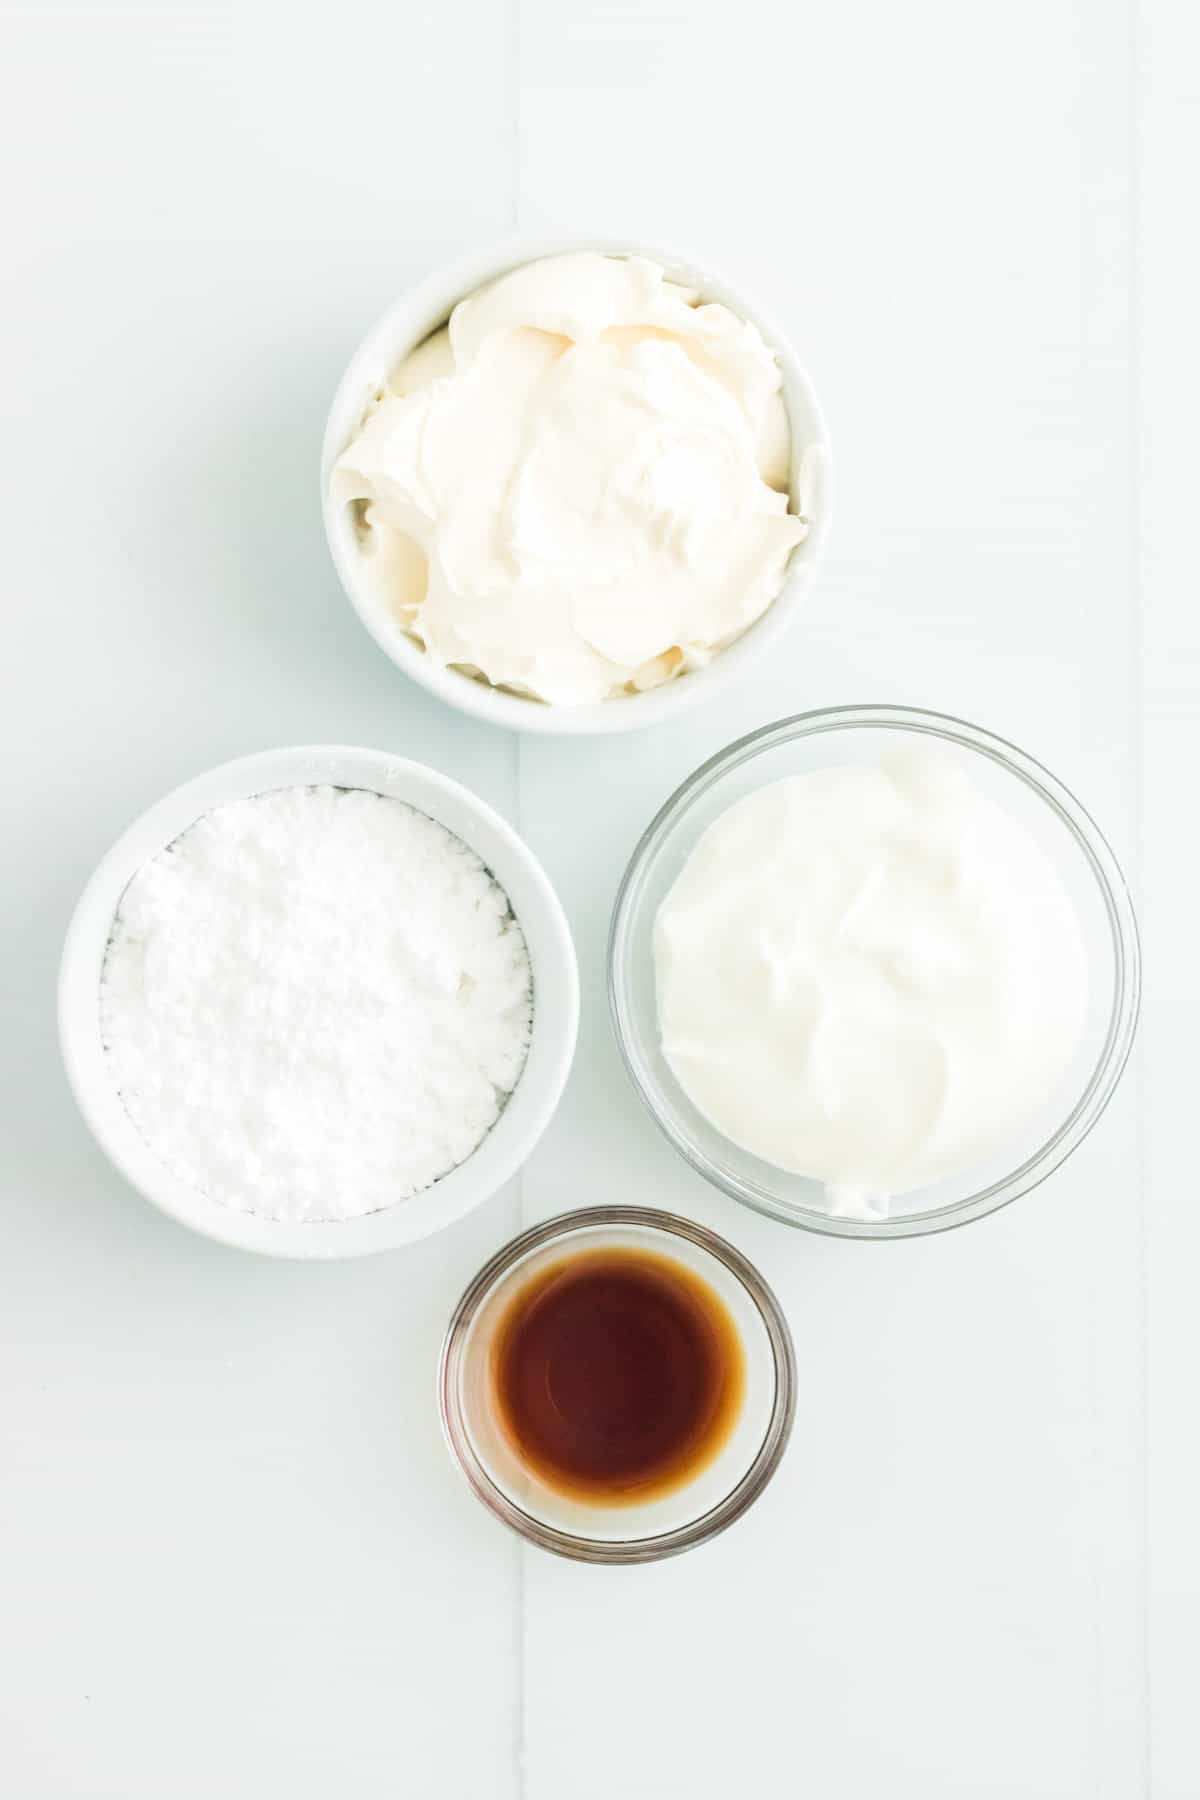 Powdered sugar, Greek yogurt, cream cheese and vanilla extract in small bowls on a countertop